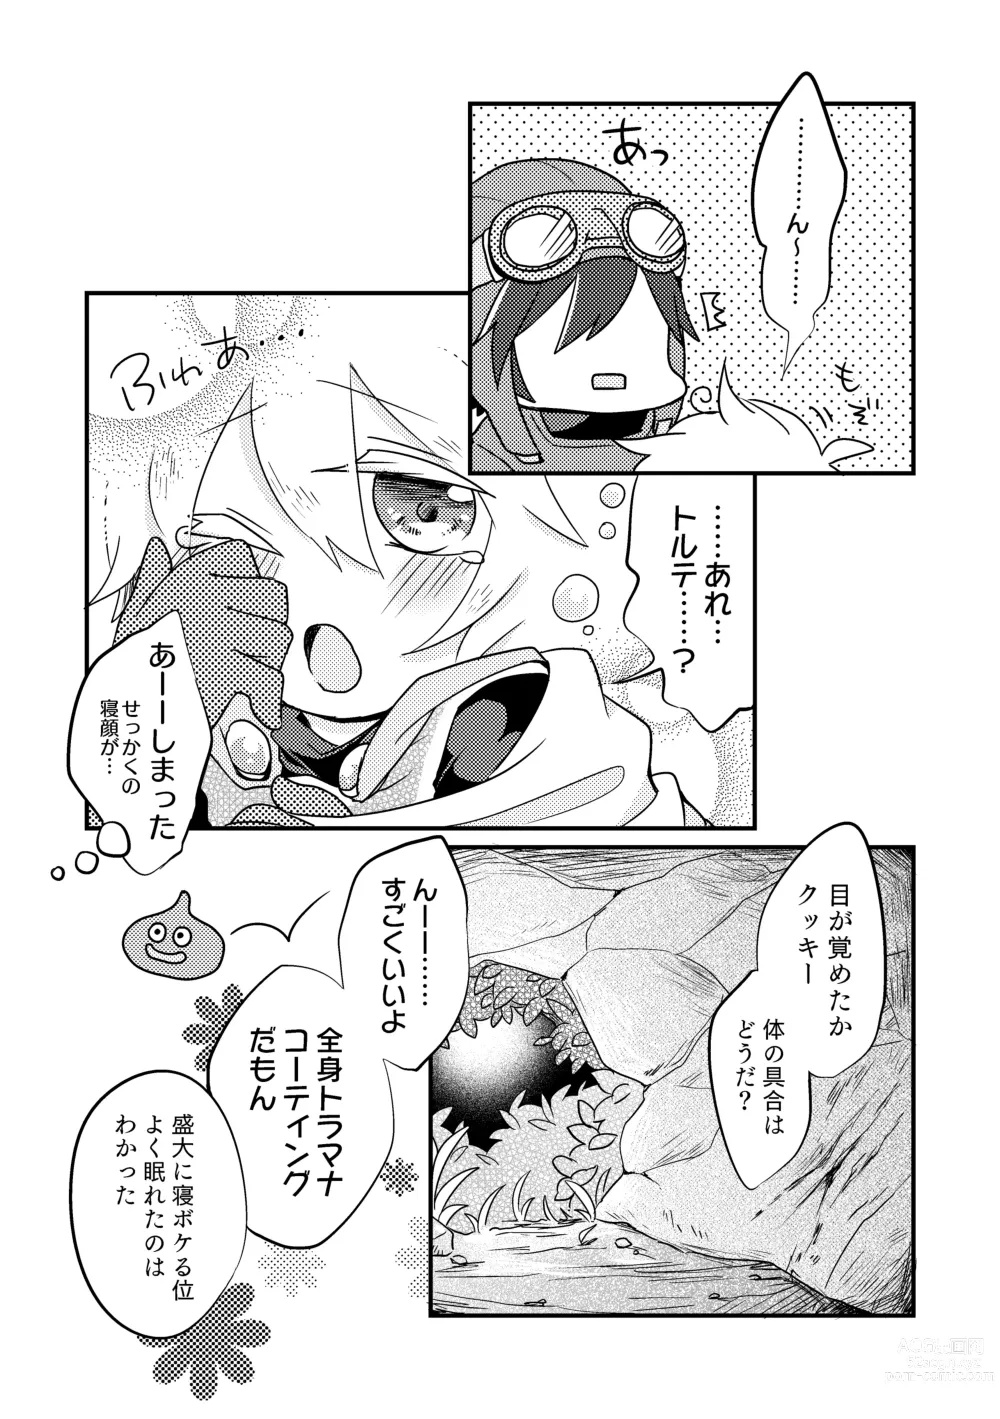 Page 10 of doujinshi Enka